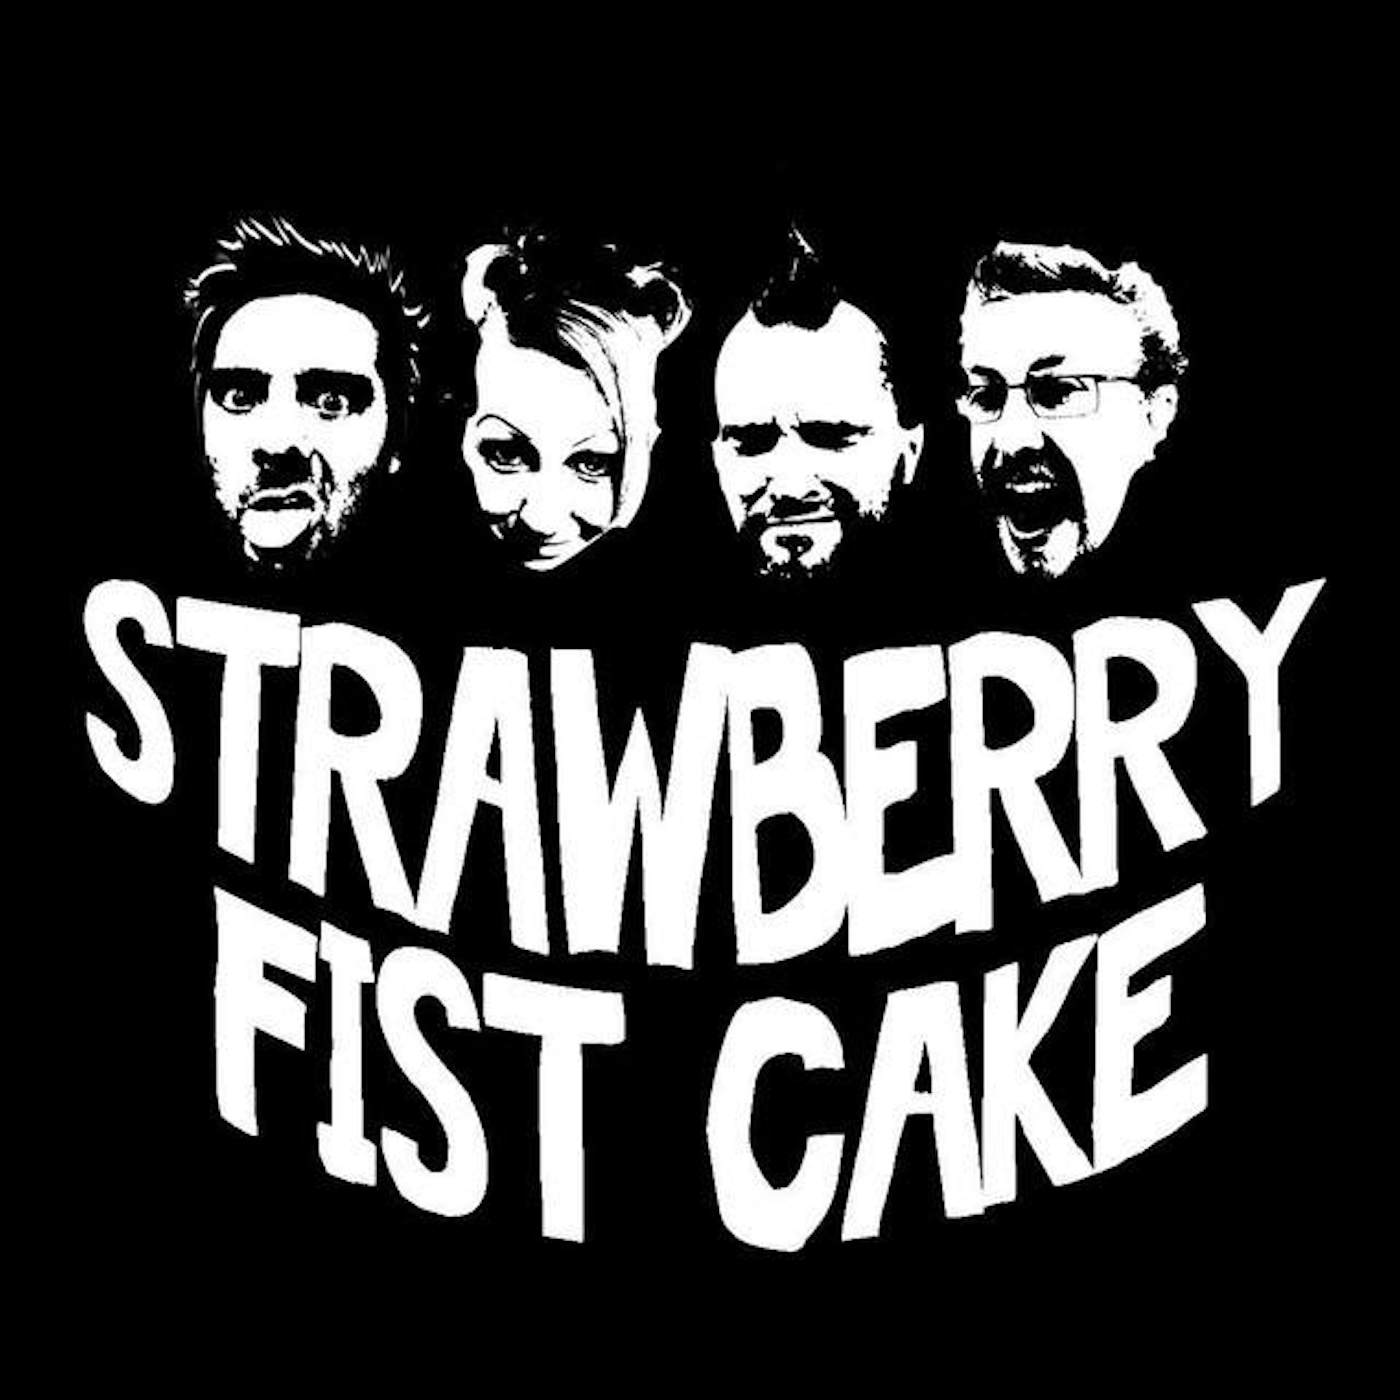 Strawberry Fist Cake